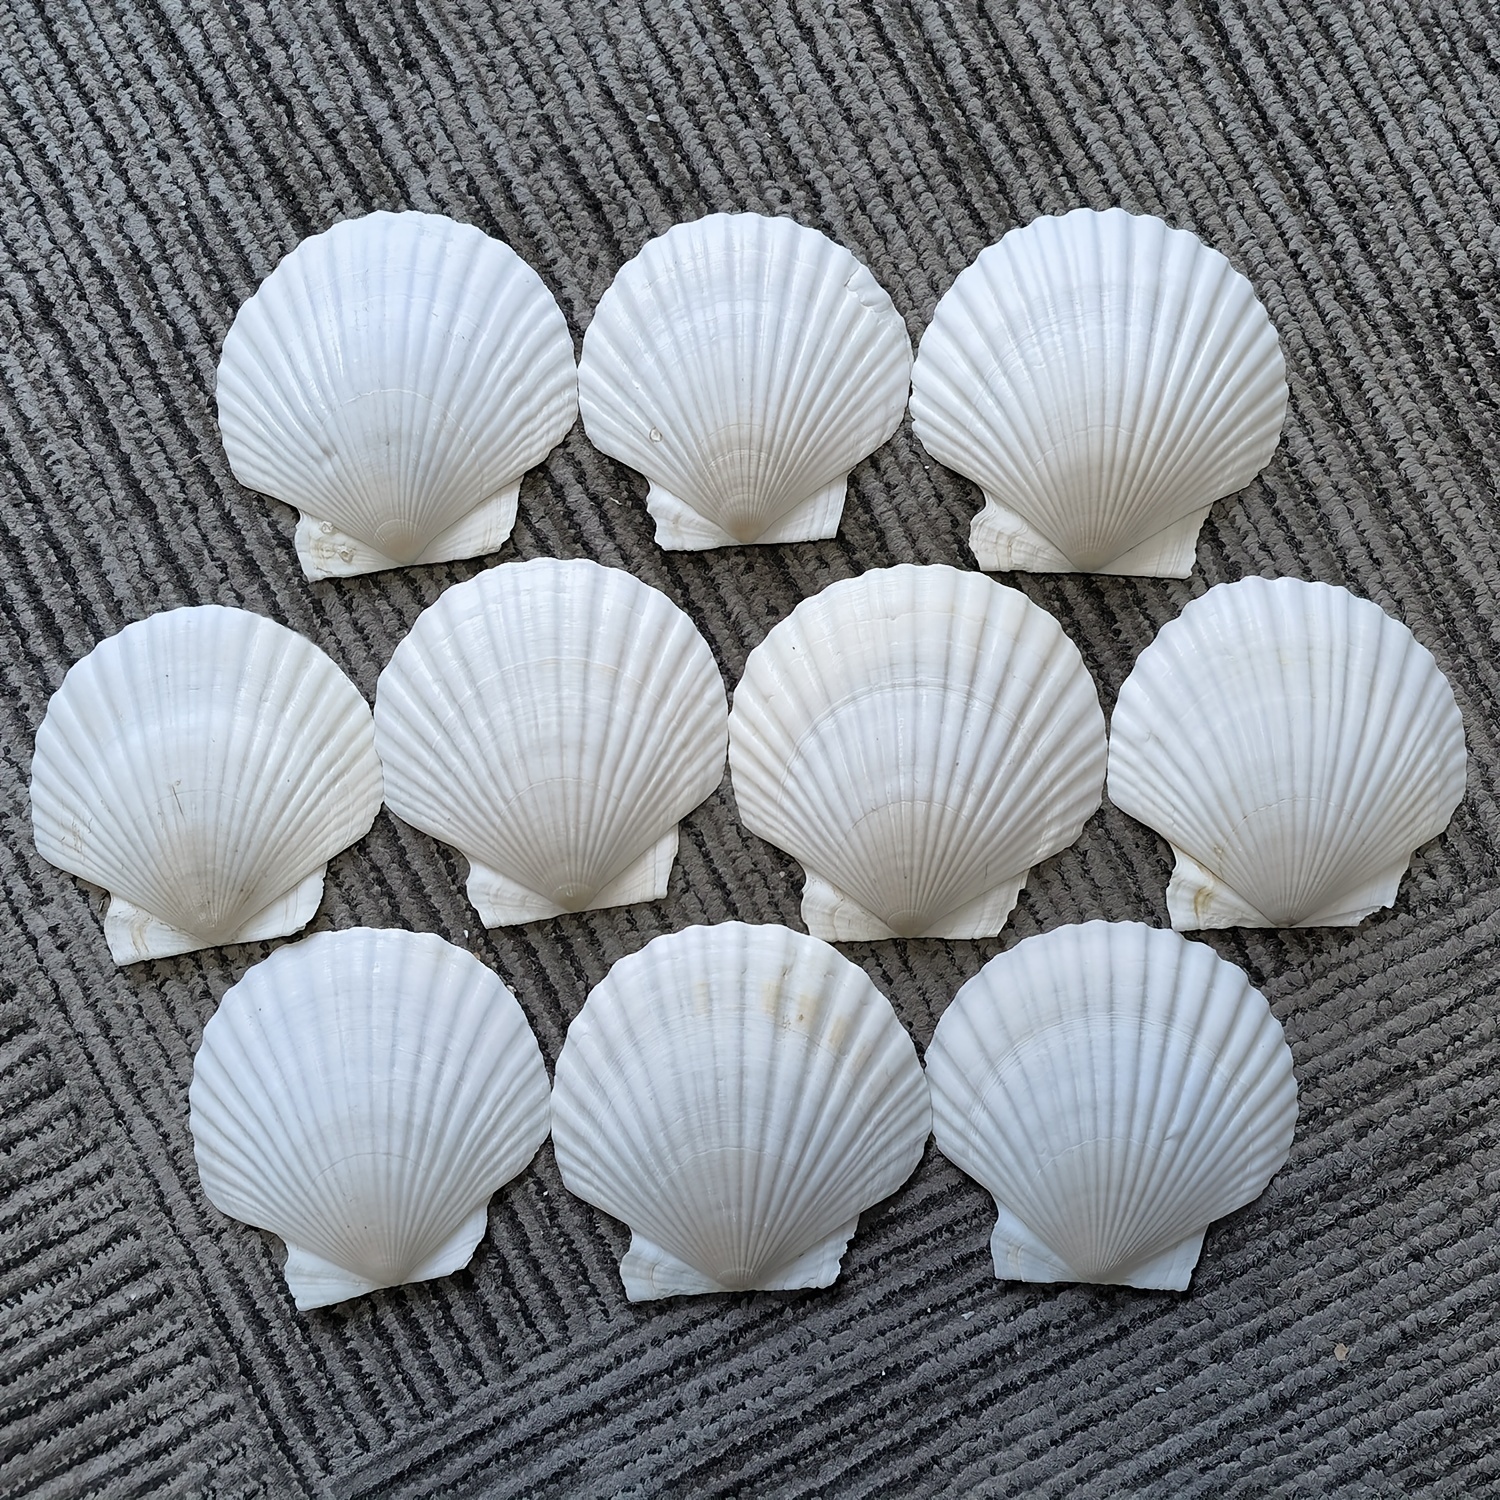 Scallop Shells White Sea Shells Crafts, Natural Sea Shell